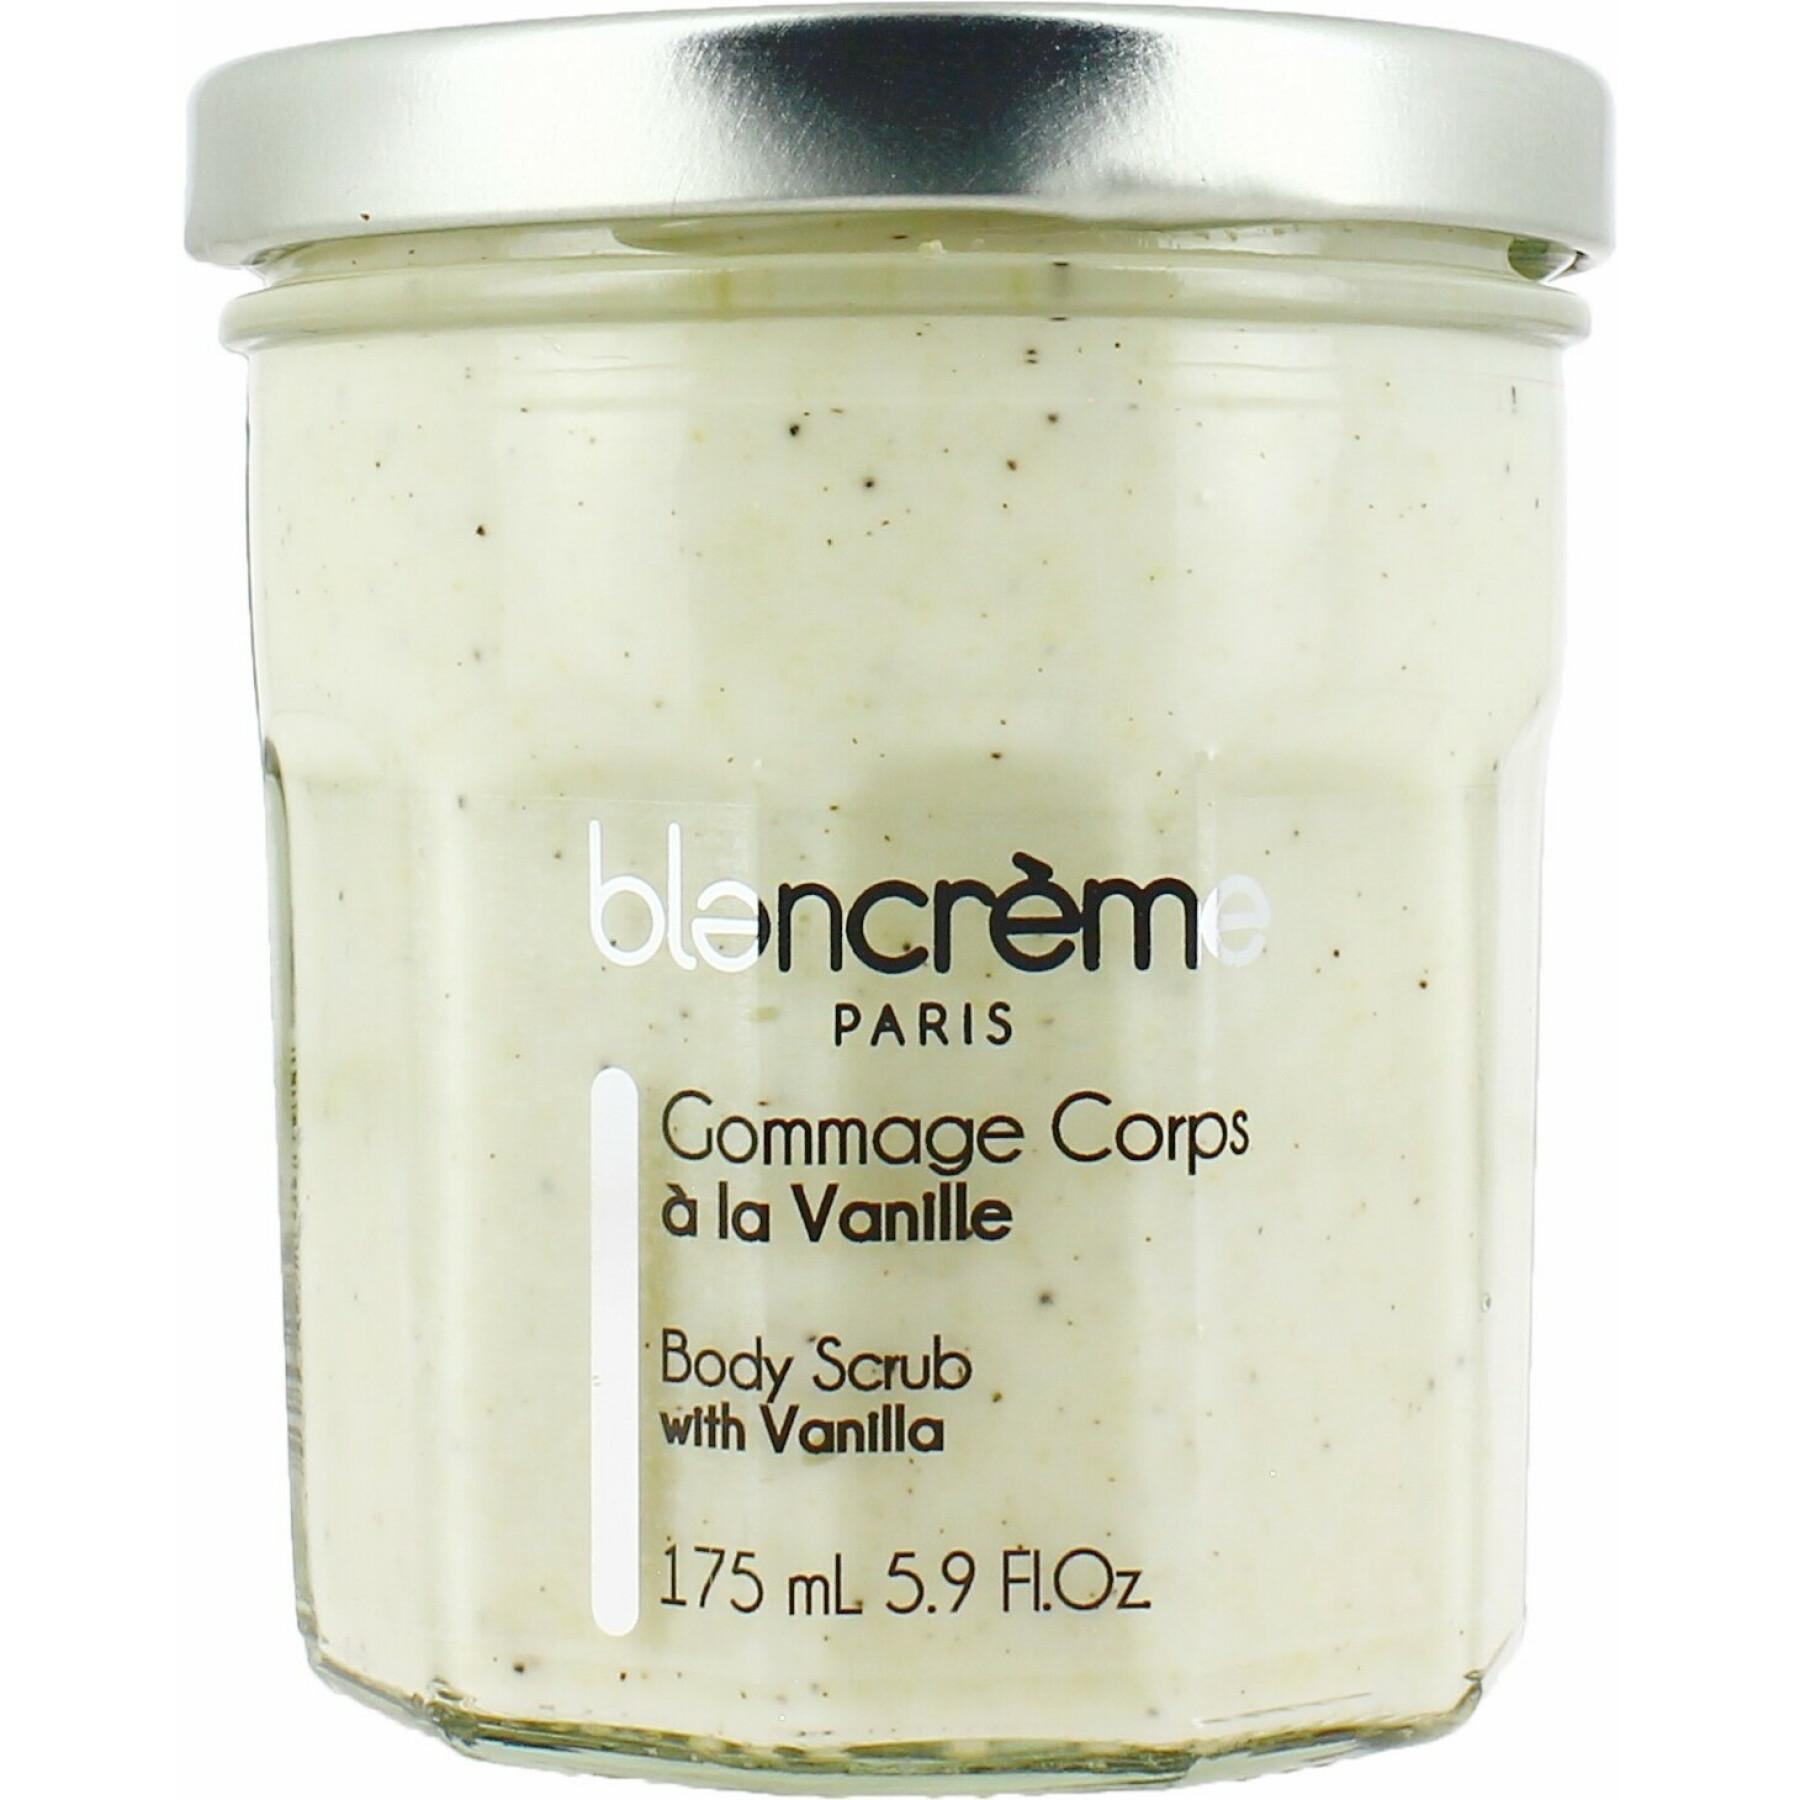 Body scrub - vanilla - Blancreme 175 ml